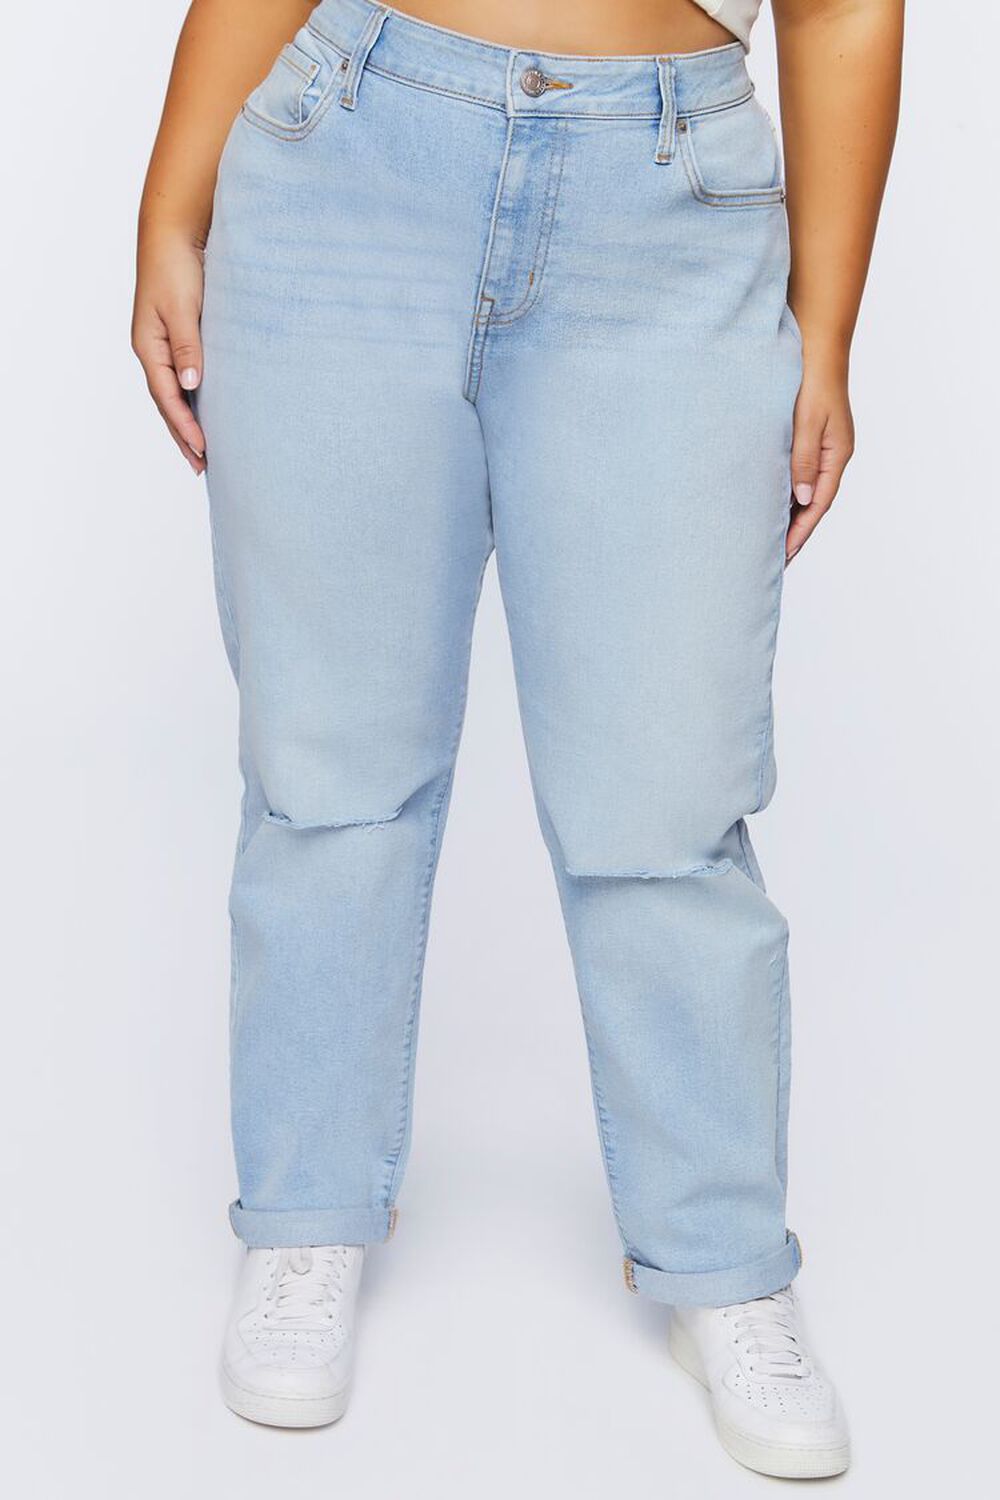 LIGHT DENIM Plus Size Baggy Distressed Jeans, image 2